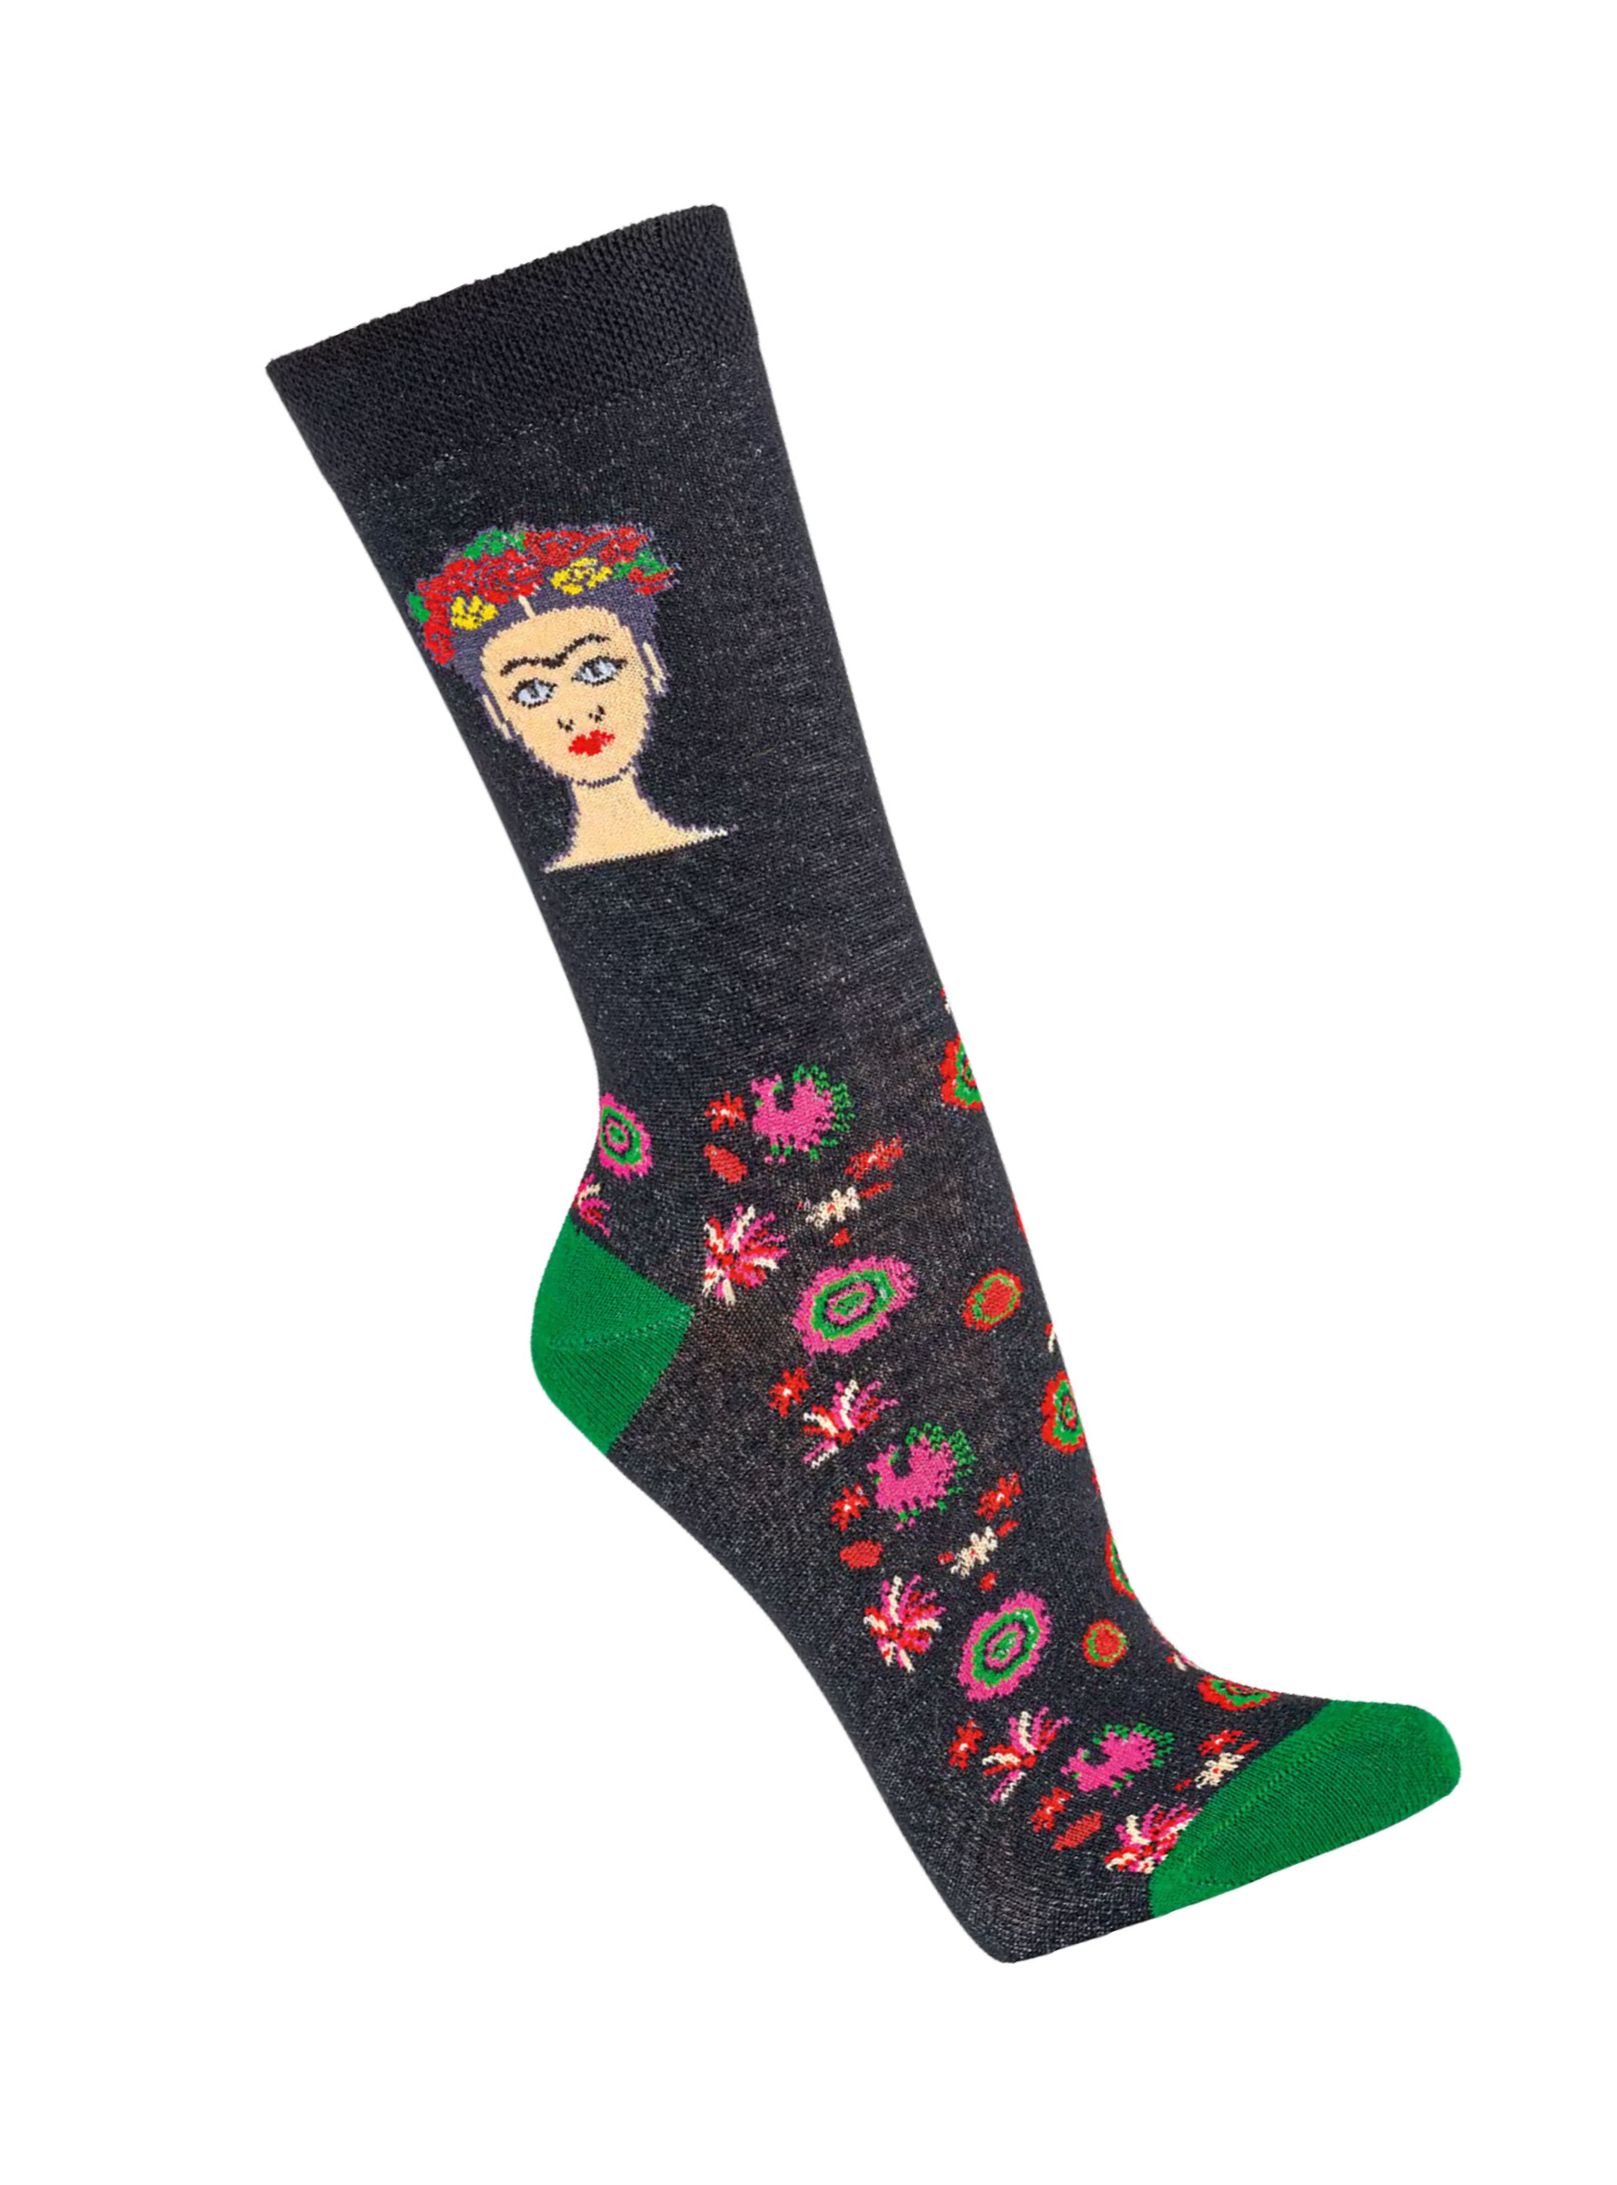 Witzige Socken FRIEDA als Geschenkidee oder zum Selbertragen für Teenager-Damen-Herren  2er-Bündel 